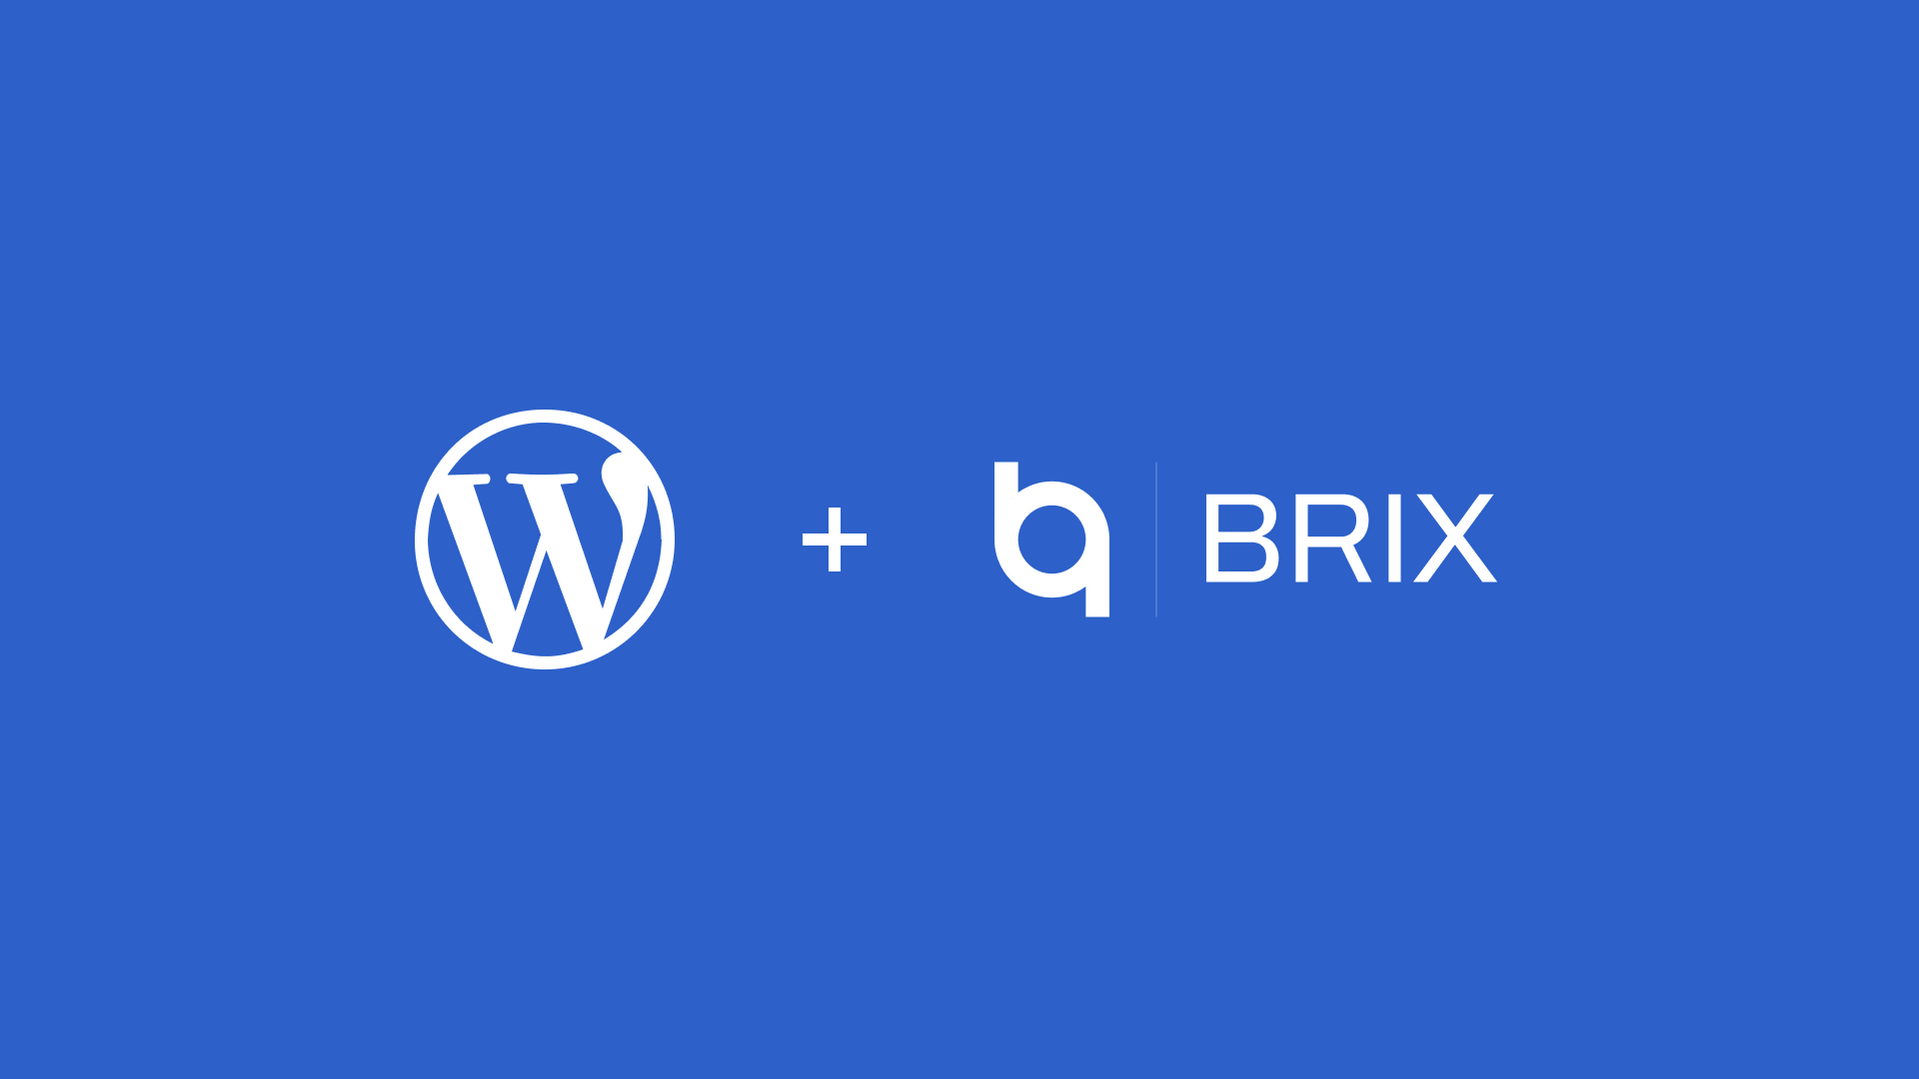 WordPress and Brix logotypes